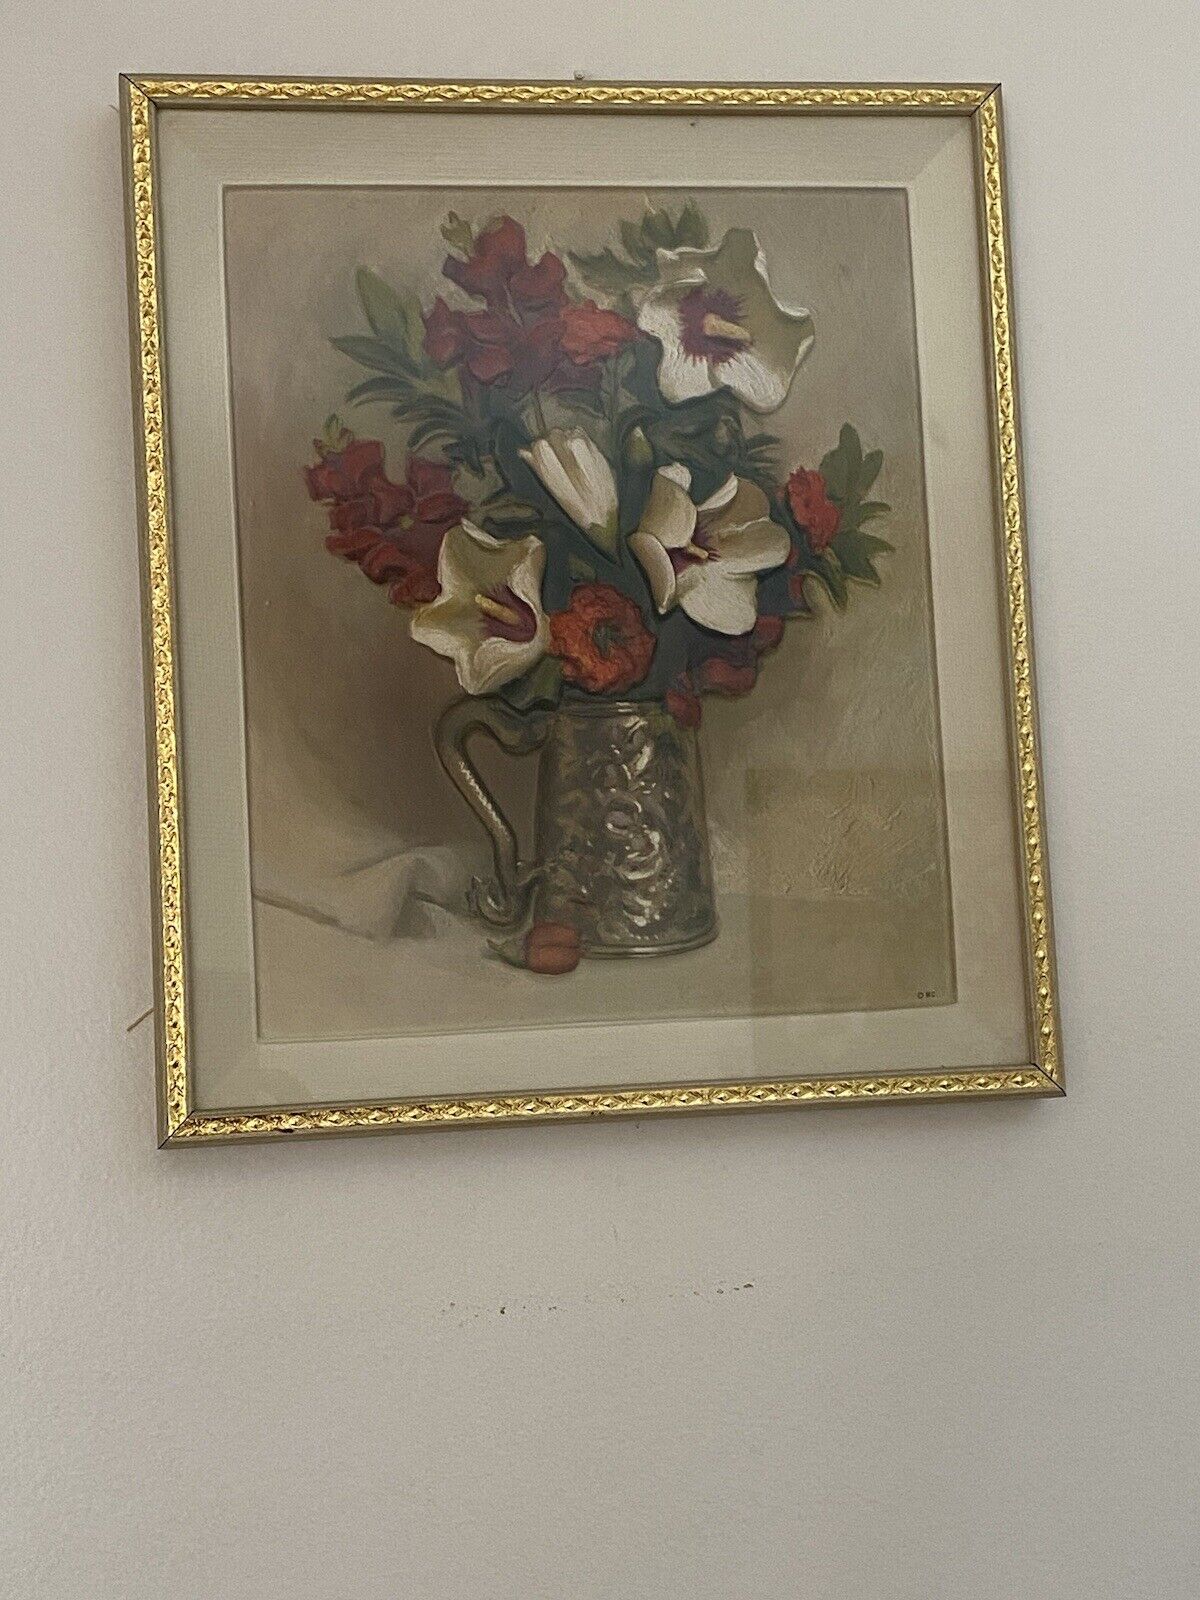 MCM Metalcraft Dimensions 3D Floral Poppies in Mug 12x14 Framed Vintage Art Mid